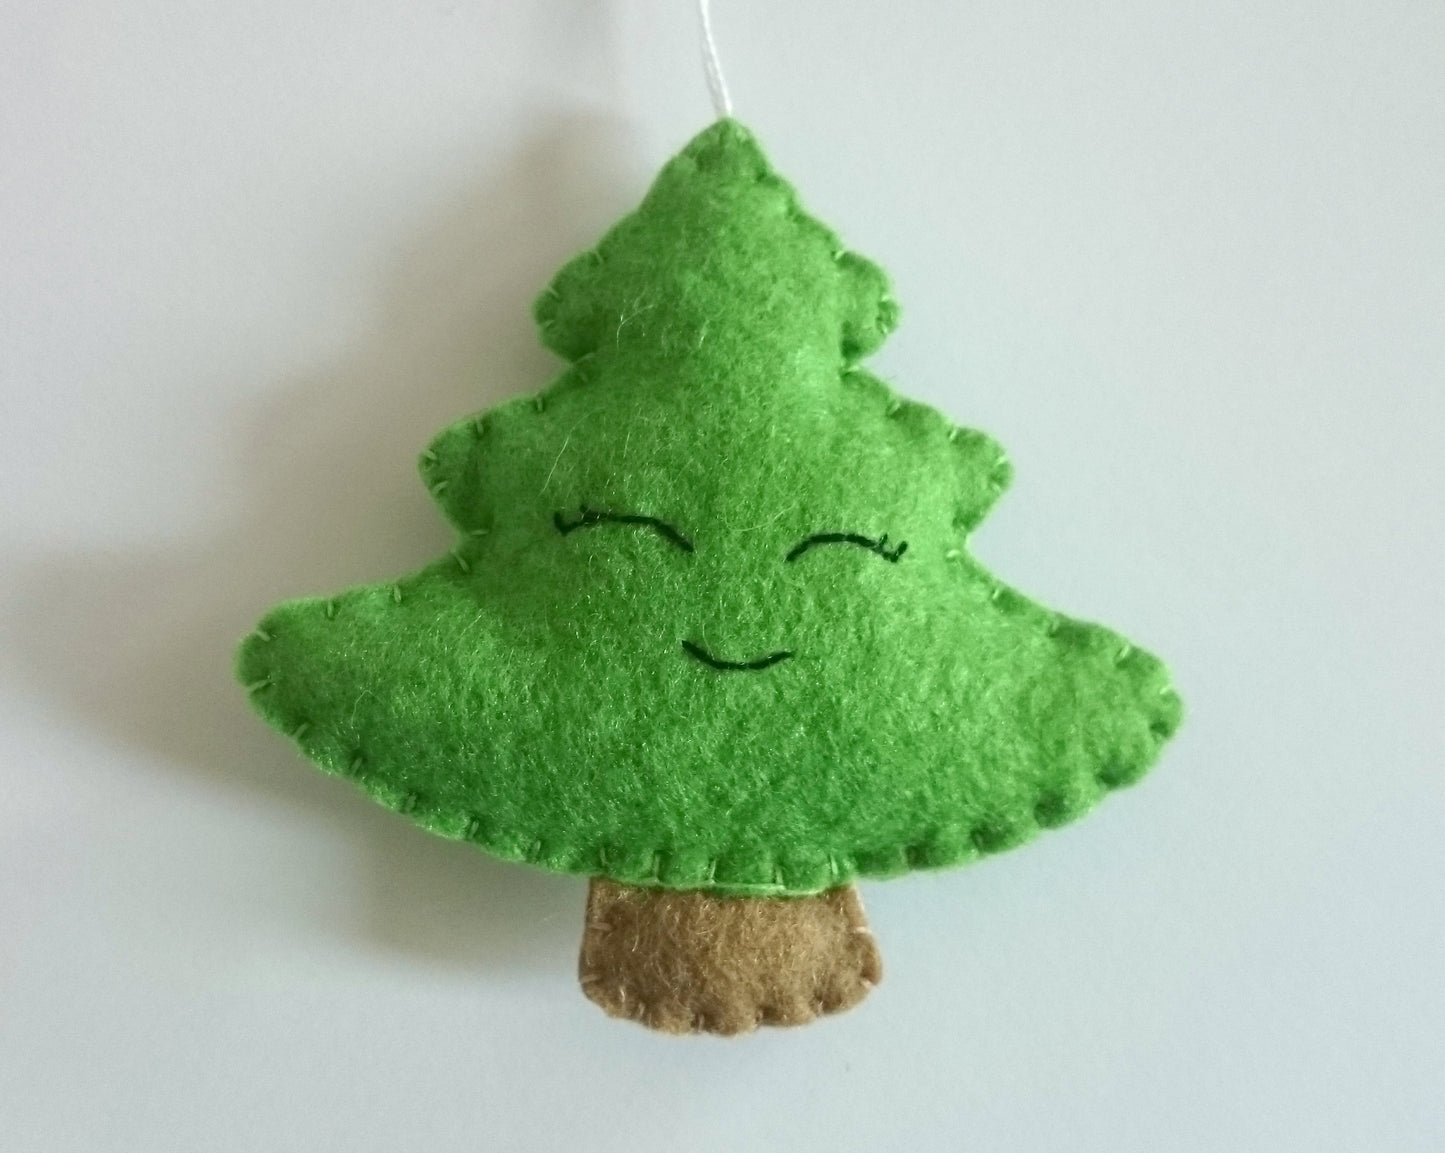 Felt Christmas tree ornament decor handmade winter gift for her home eco-friendly kawaii Xmas decoration